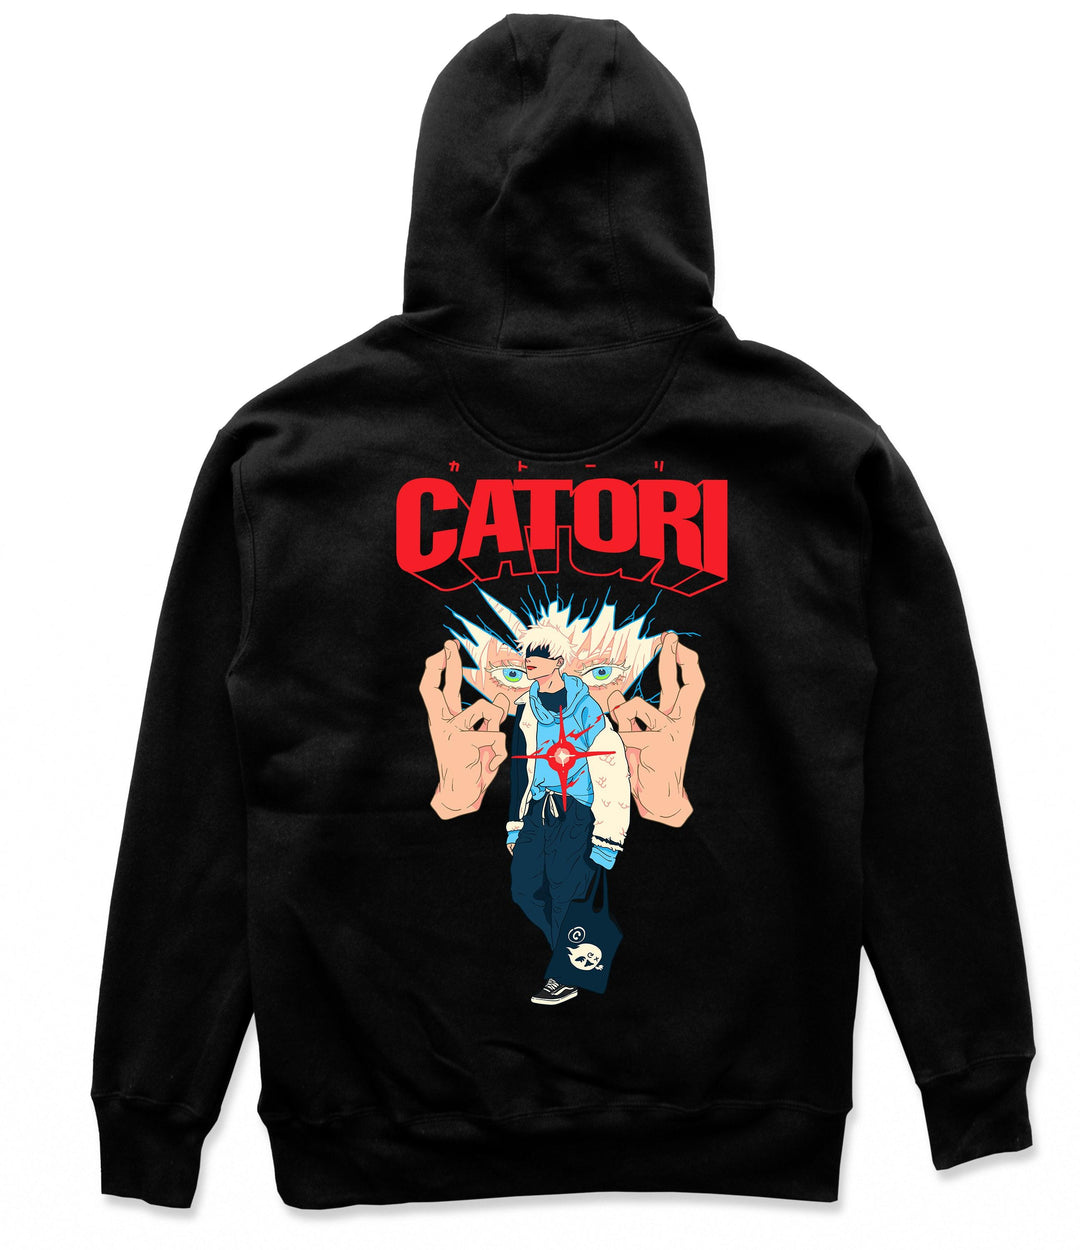 Snap Hoodie at Catori Clothing | Graphic & Anime Tees, Hoodies & Sweatshirts 